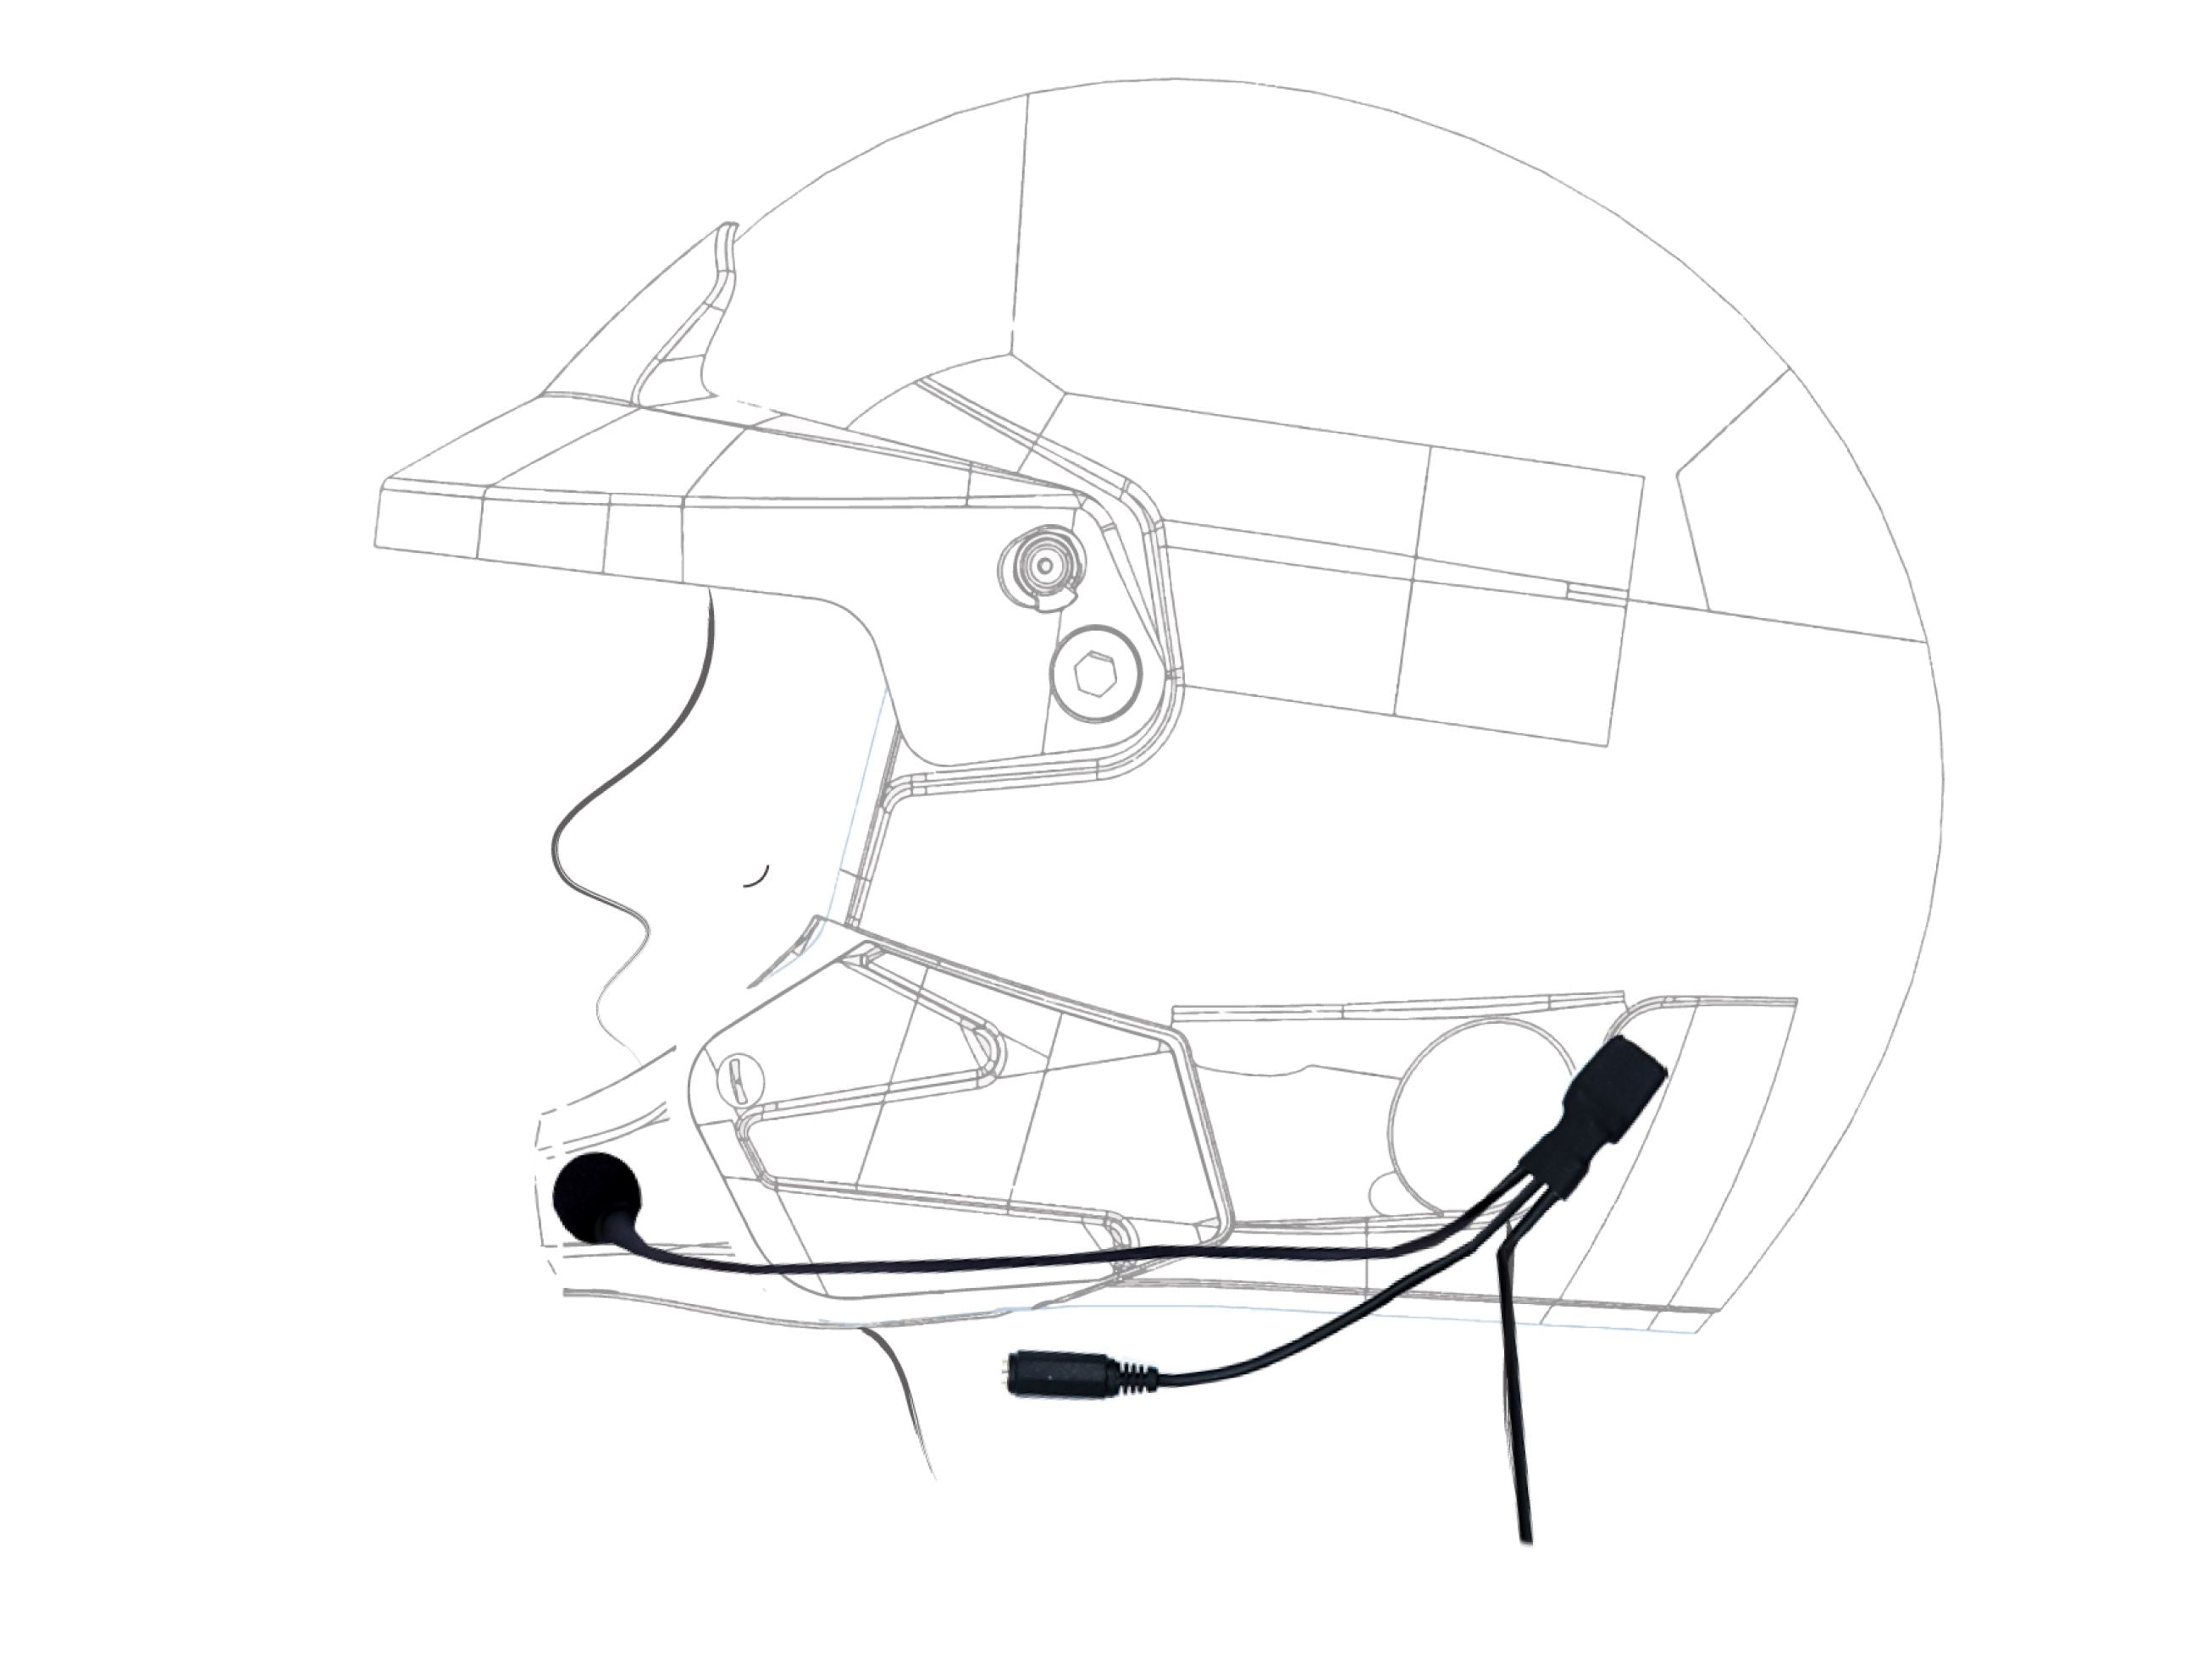 ZERONOISE 6300017 Radio helmet kit for Full Face helmet, Male Nexus 4 PIN IMSA, with 3.5mm stereo connector for earplugs Photo-0 